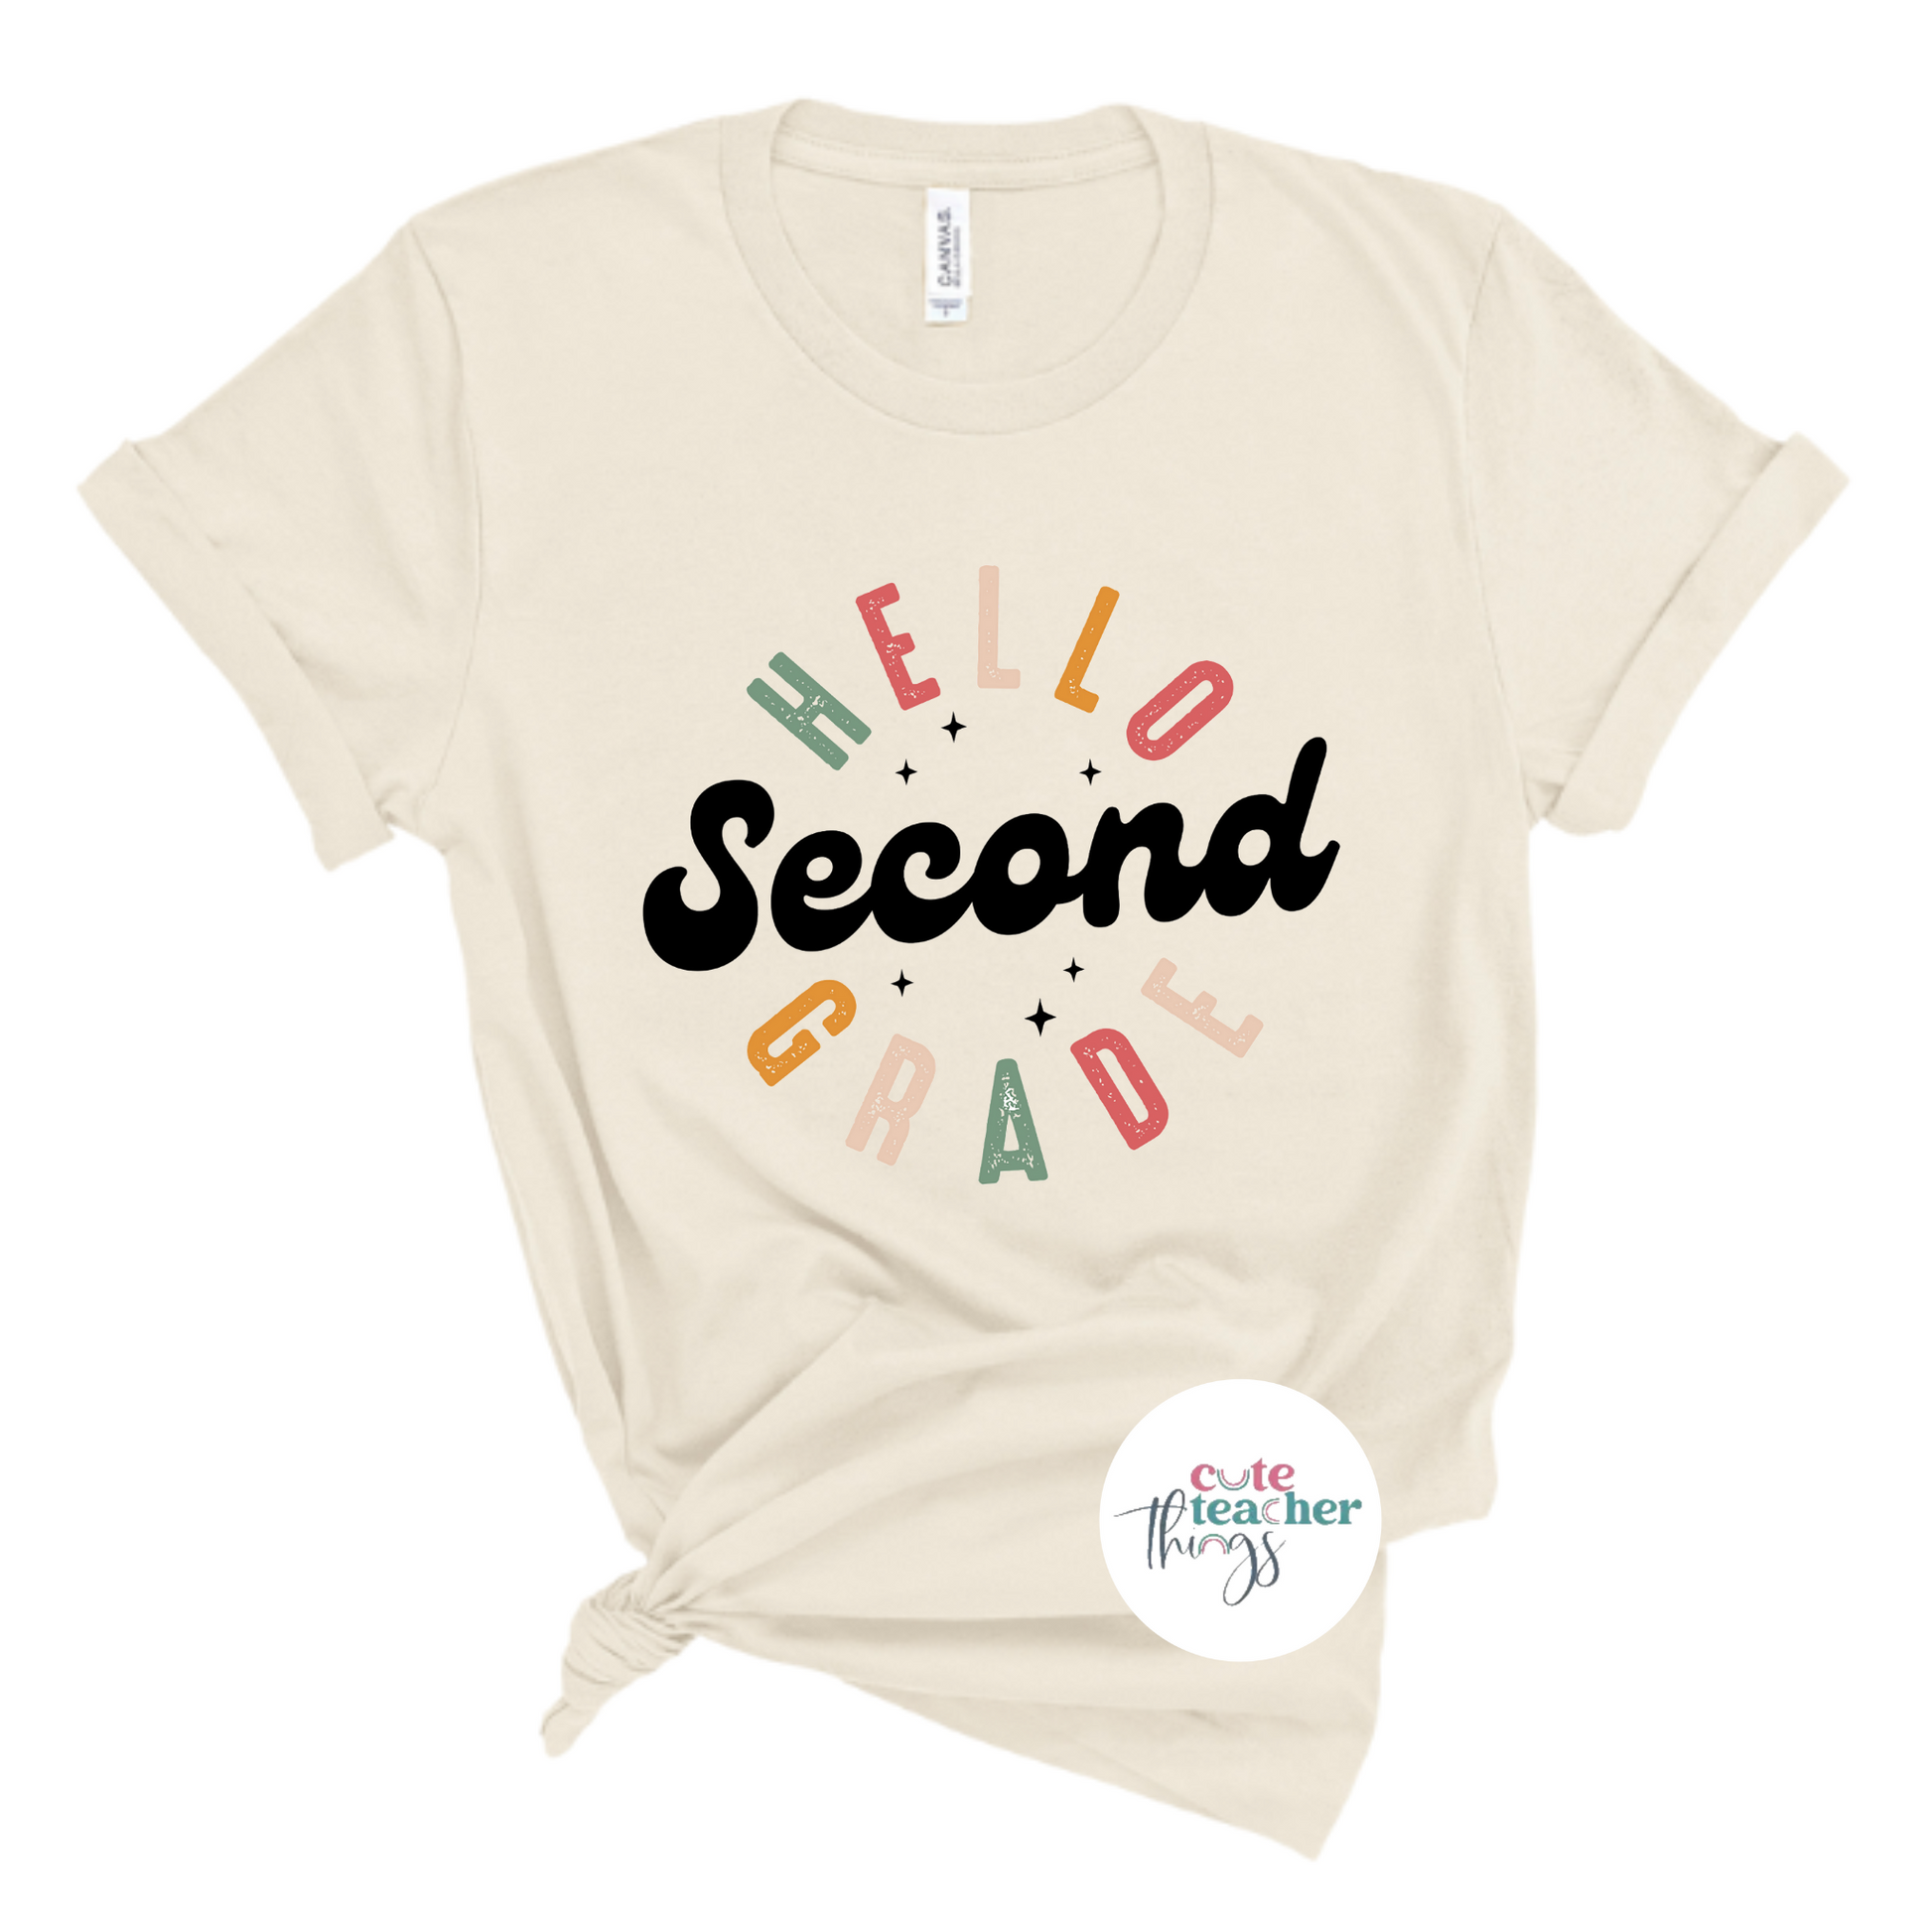 hello second grade 2 tee, appreciation gift, second grade graphic shirt